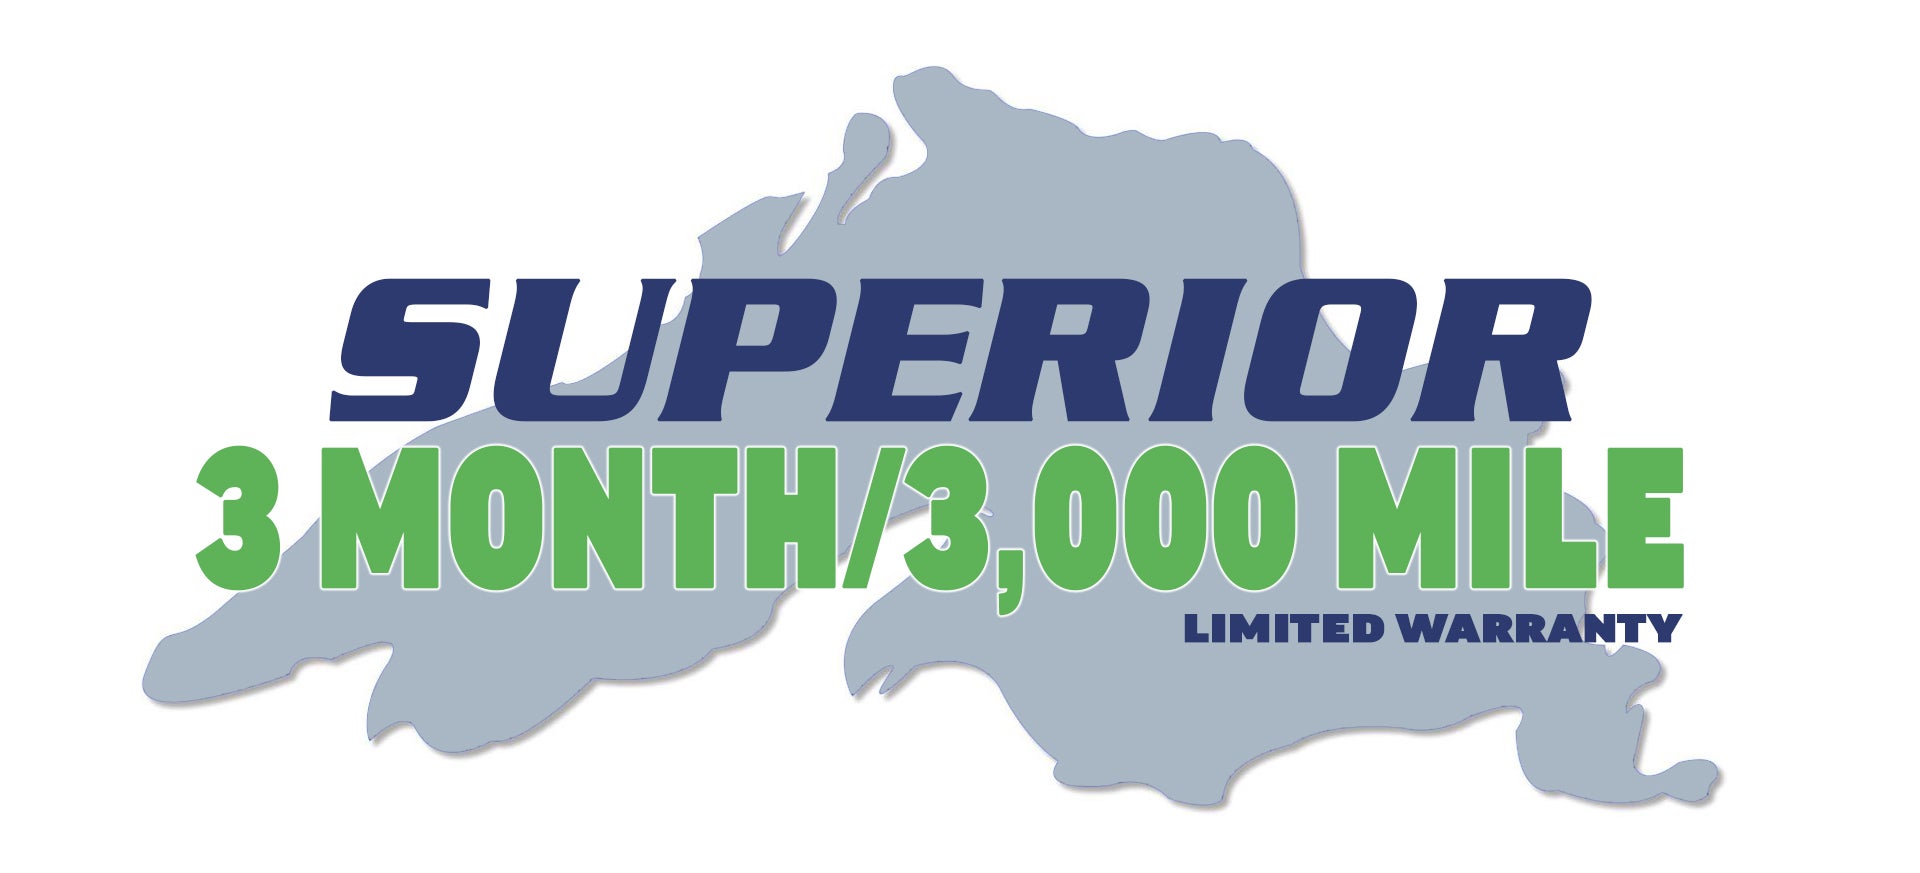 Superior 3 Month 3000 mile warranty